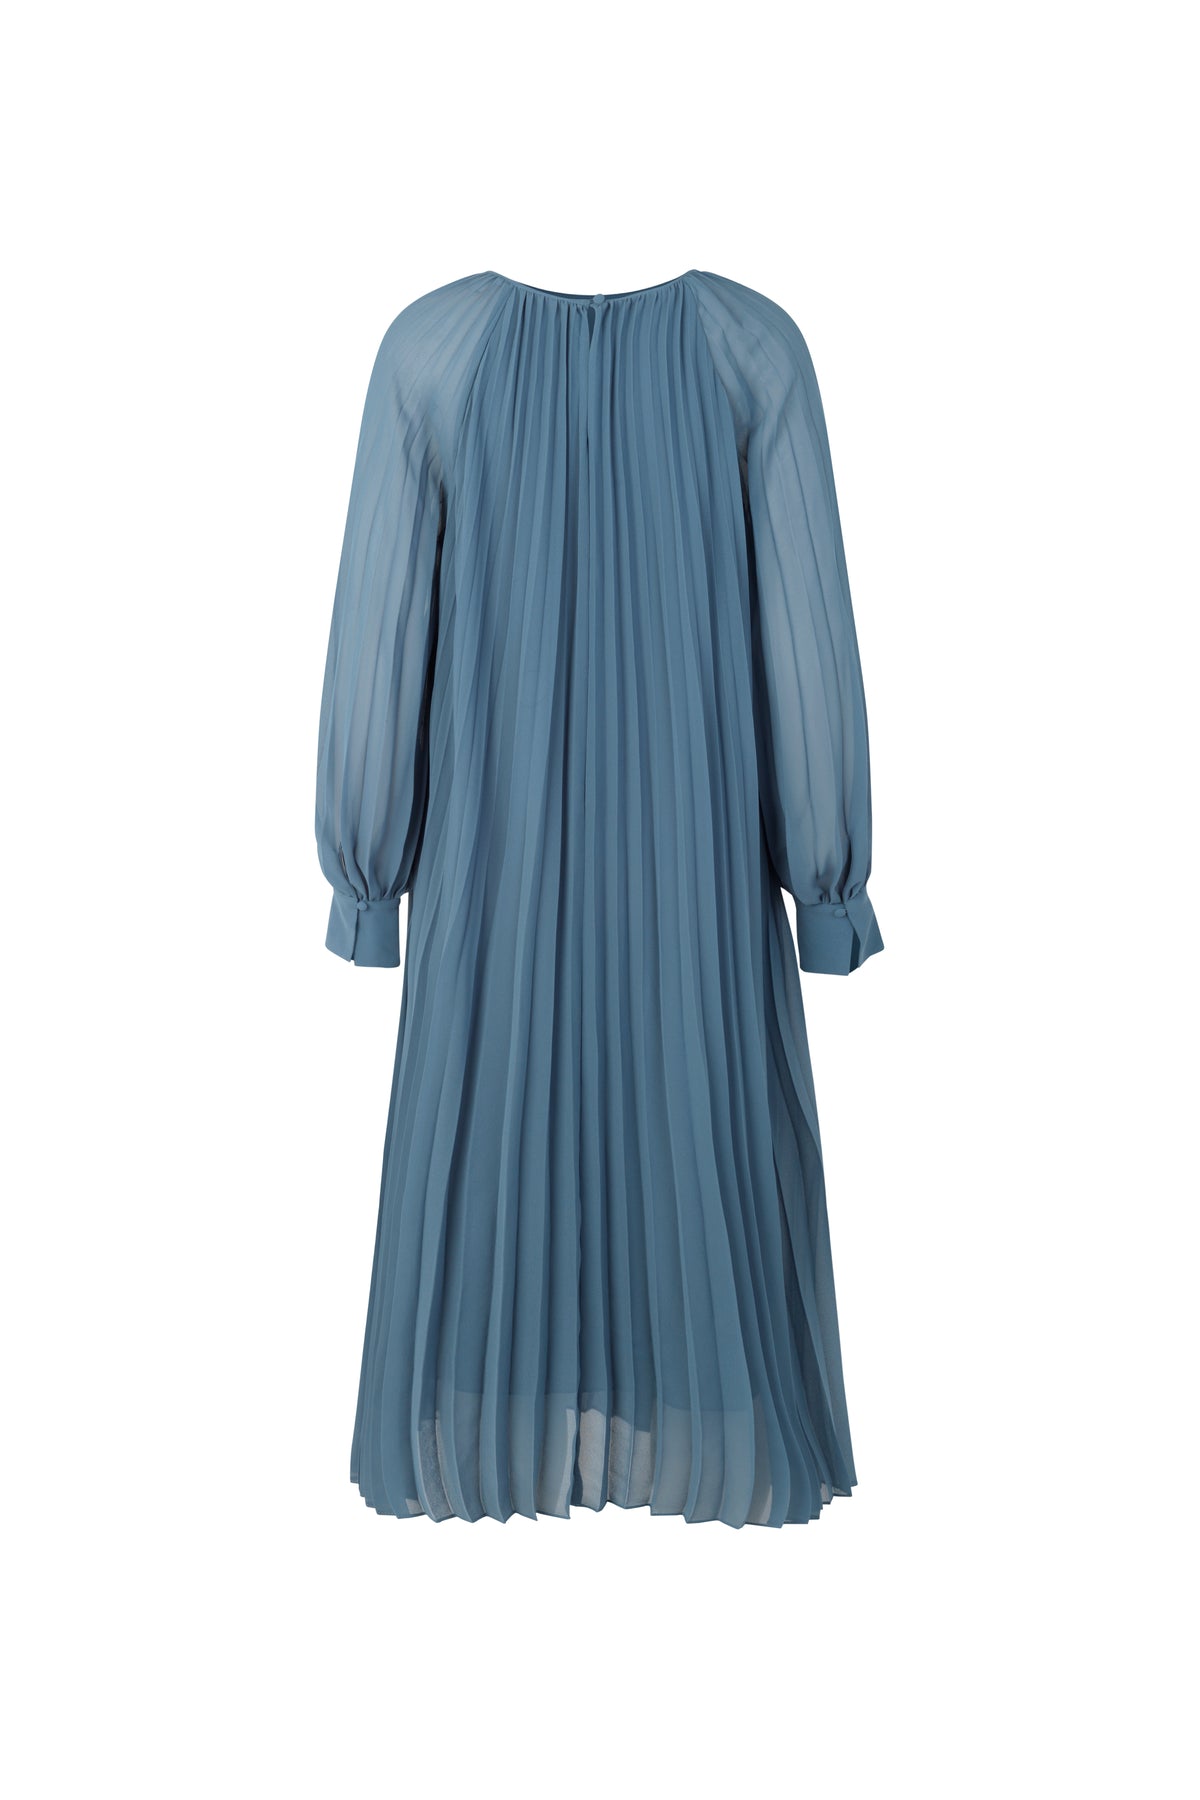 Annmari Dress 6621 - China Blue